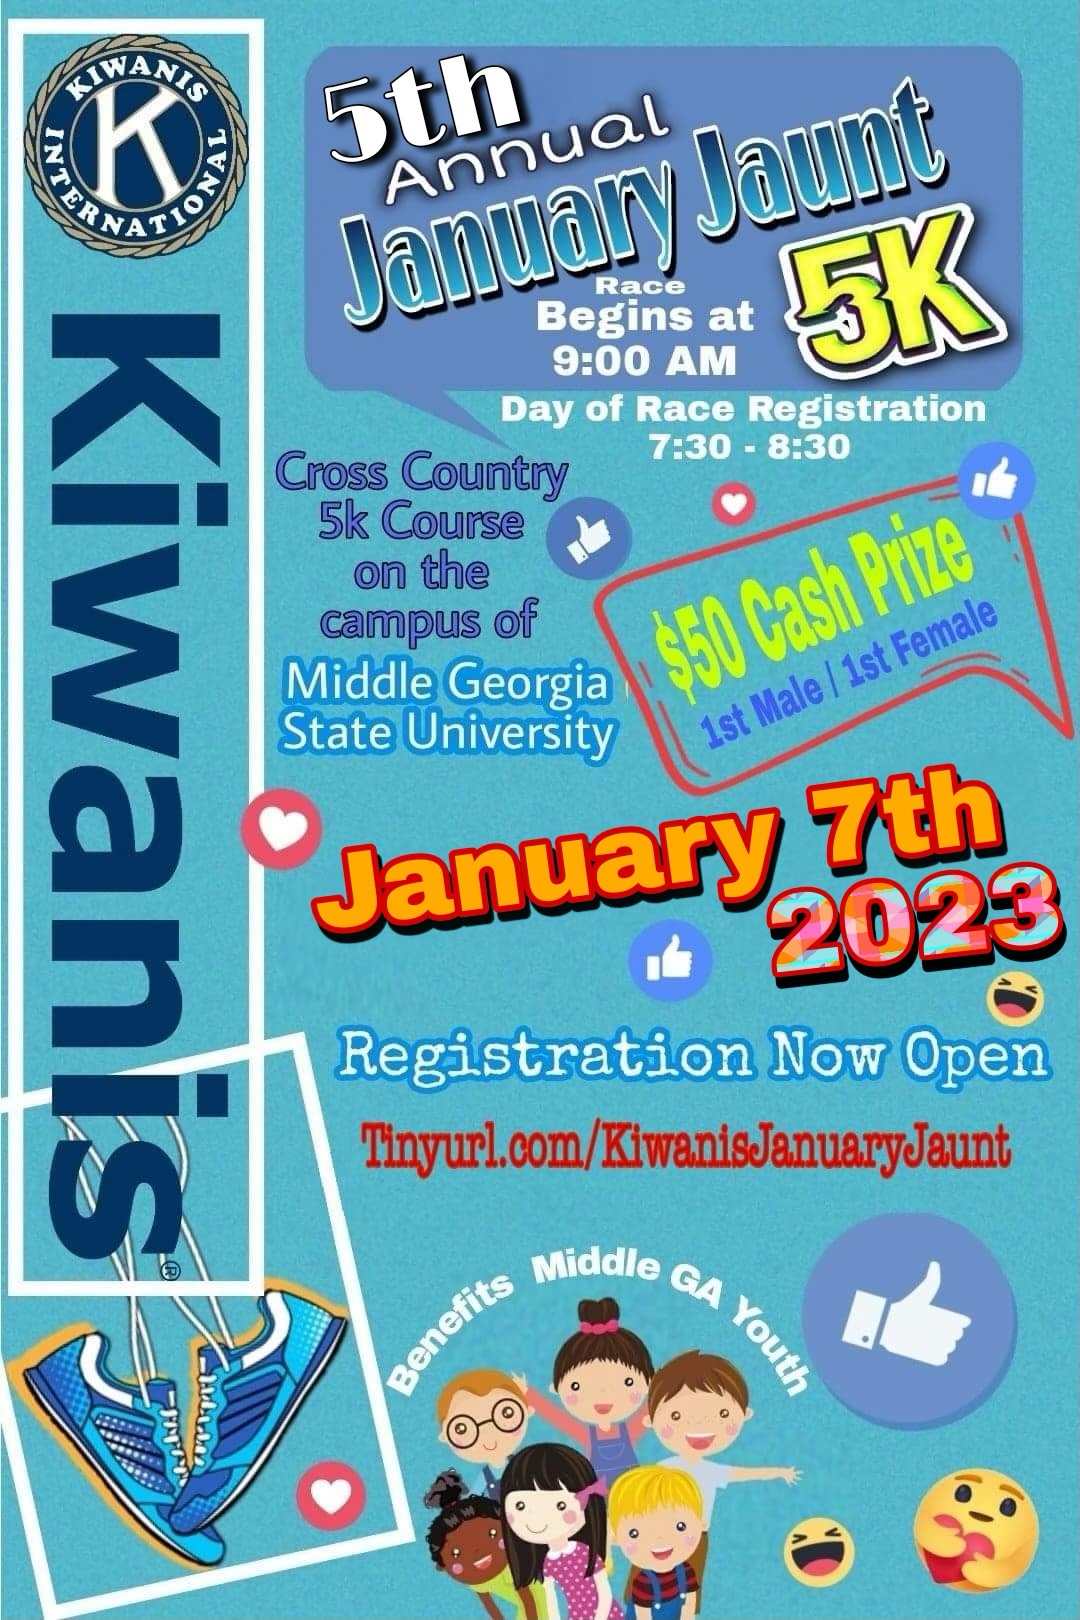 5th Annual Kiwanis January Jaunt 5K